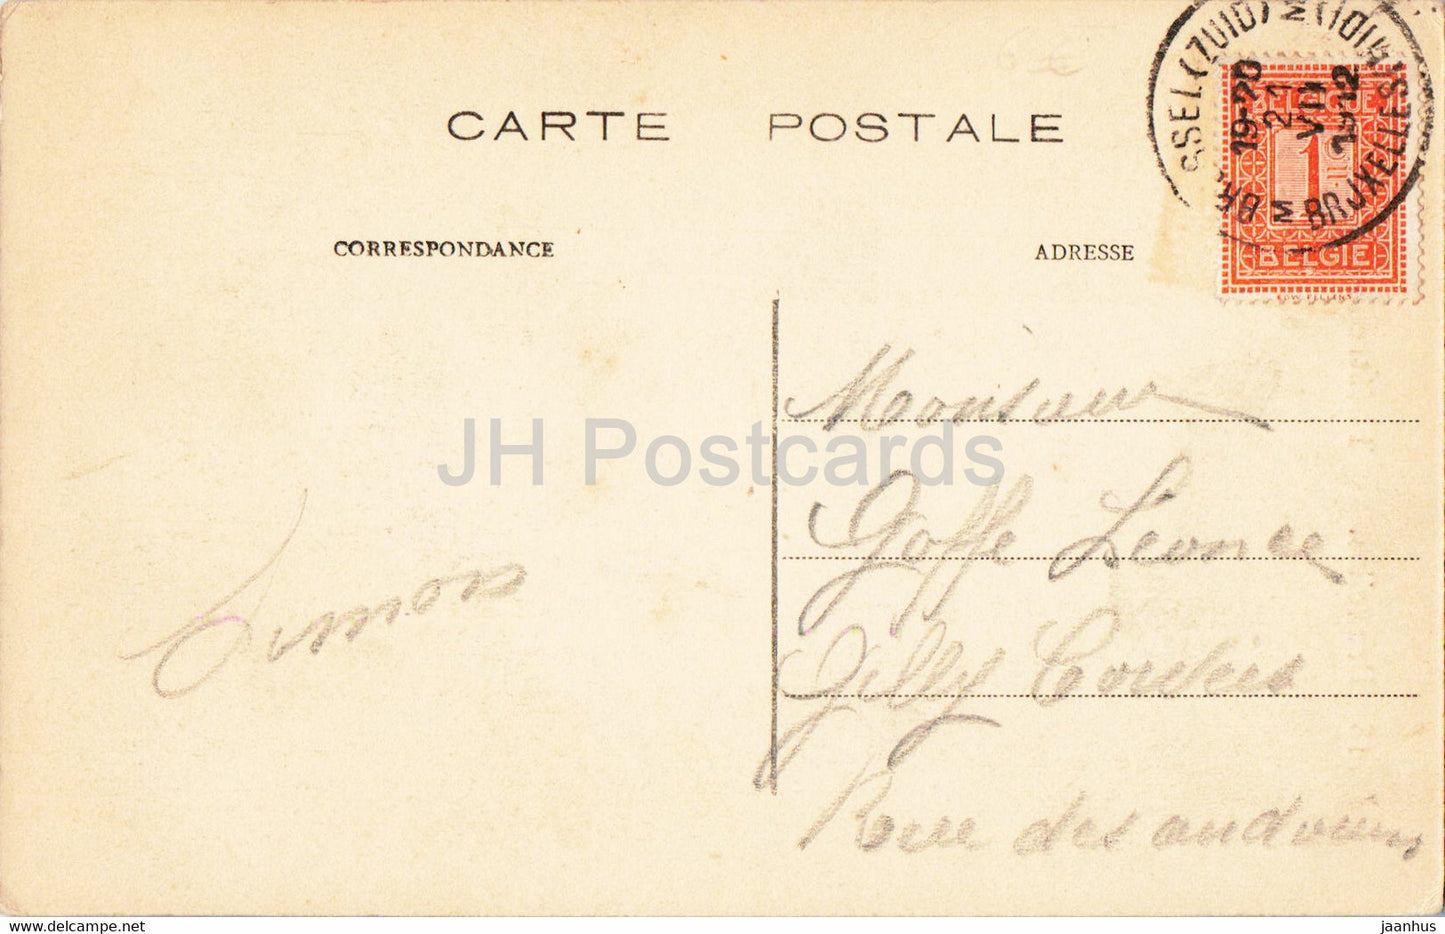 Brüssel - Brüssel - Theater Flamand - 18 - alte Postkarte - 1912 - Belgien - gebraucht